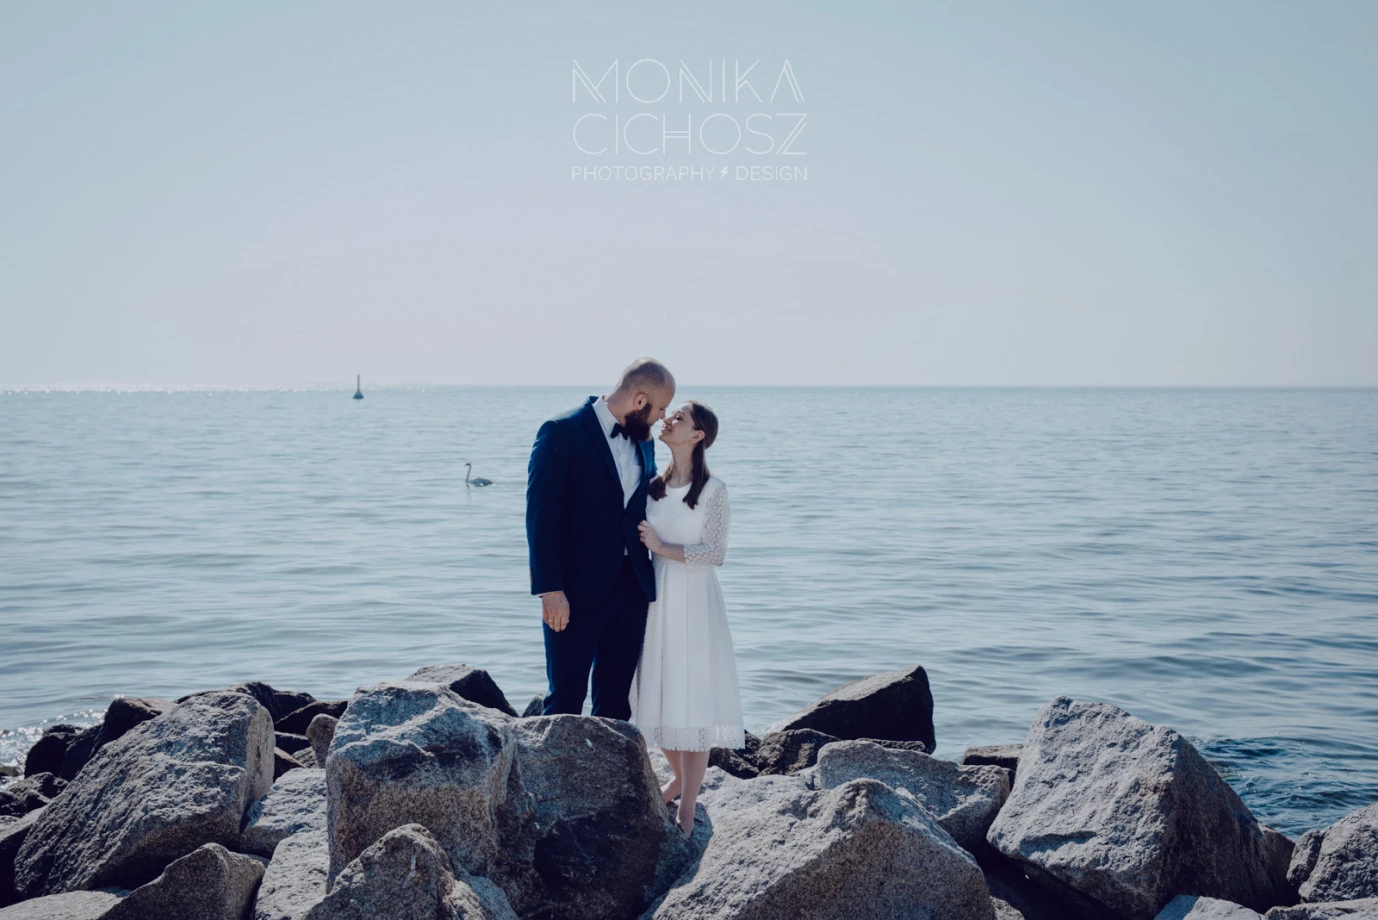 fotograf koszalin monika-cichosz portfolio zdjecia slubne inspiracje wesele plener slubny sesja slubna